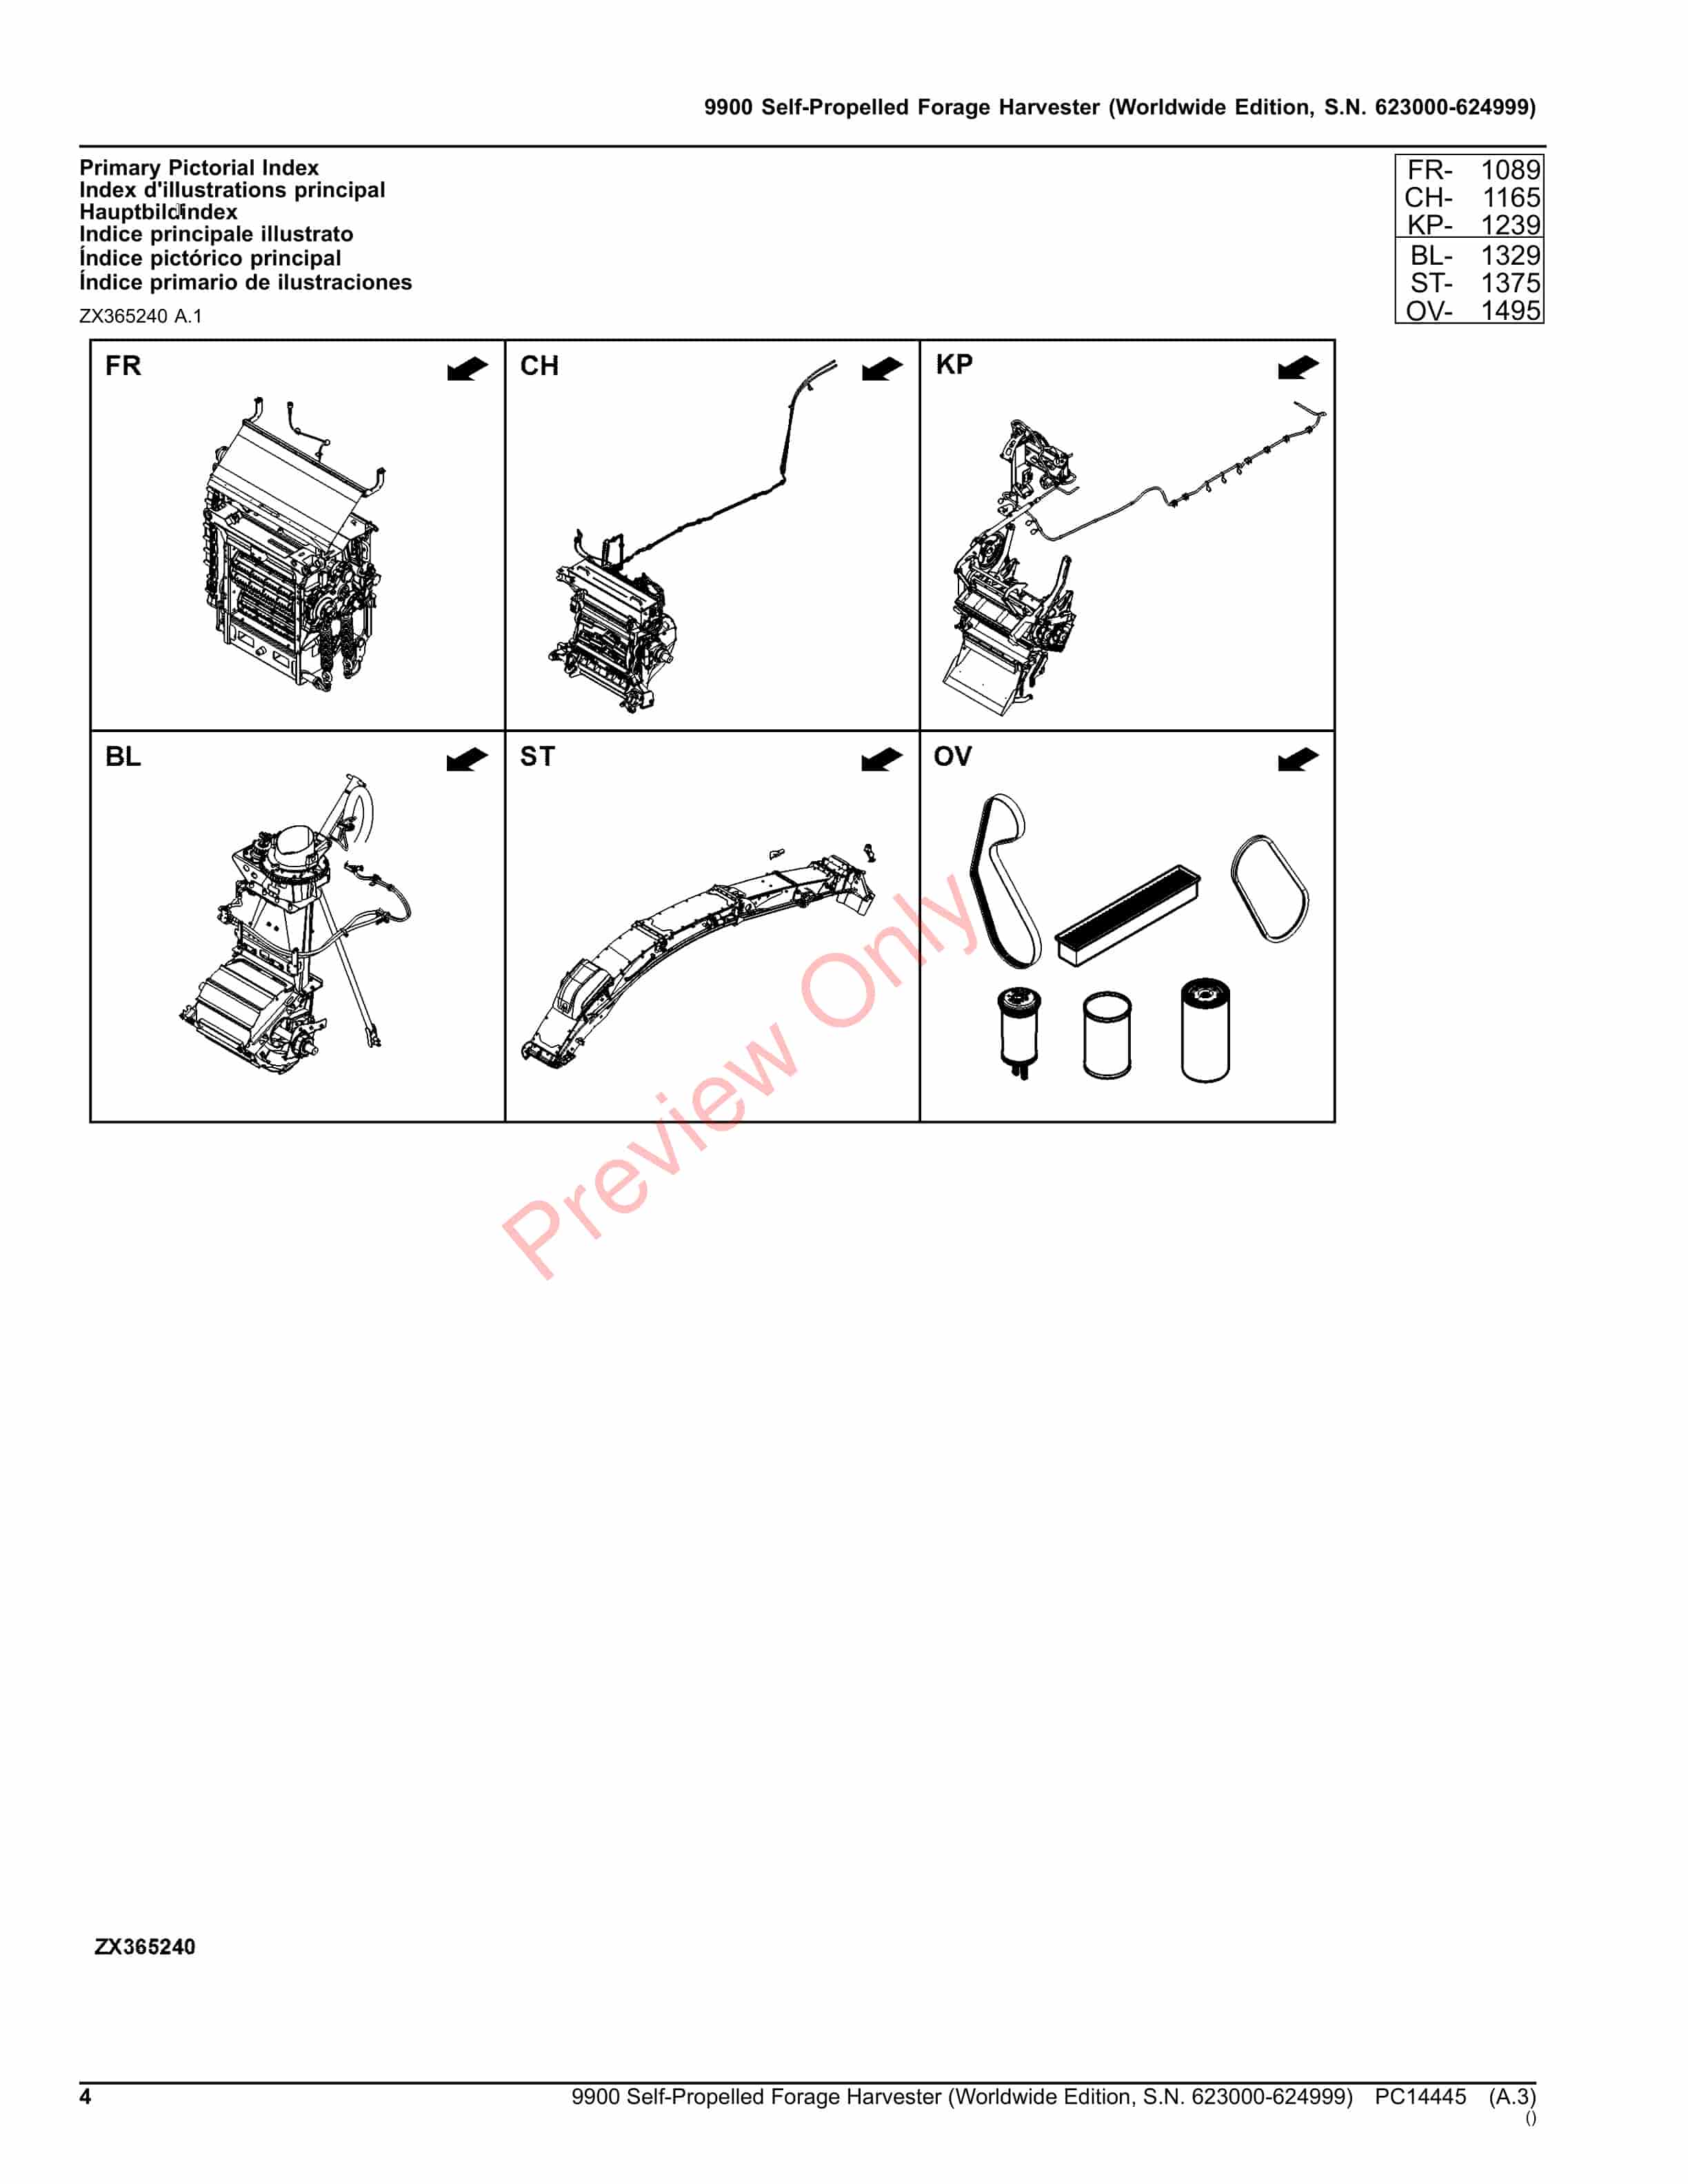 John Deere 9900 Self-Propelled Forage Harvester Parts Catalog PC14445 24AUG23-4